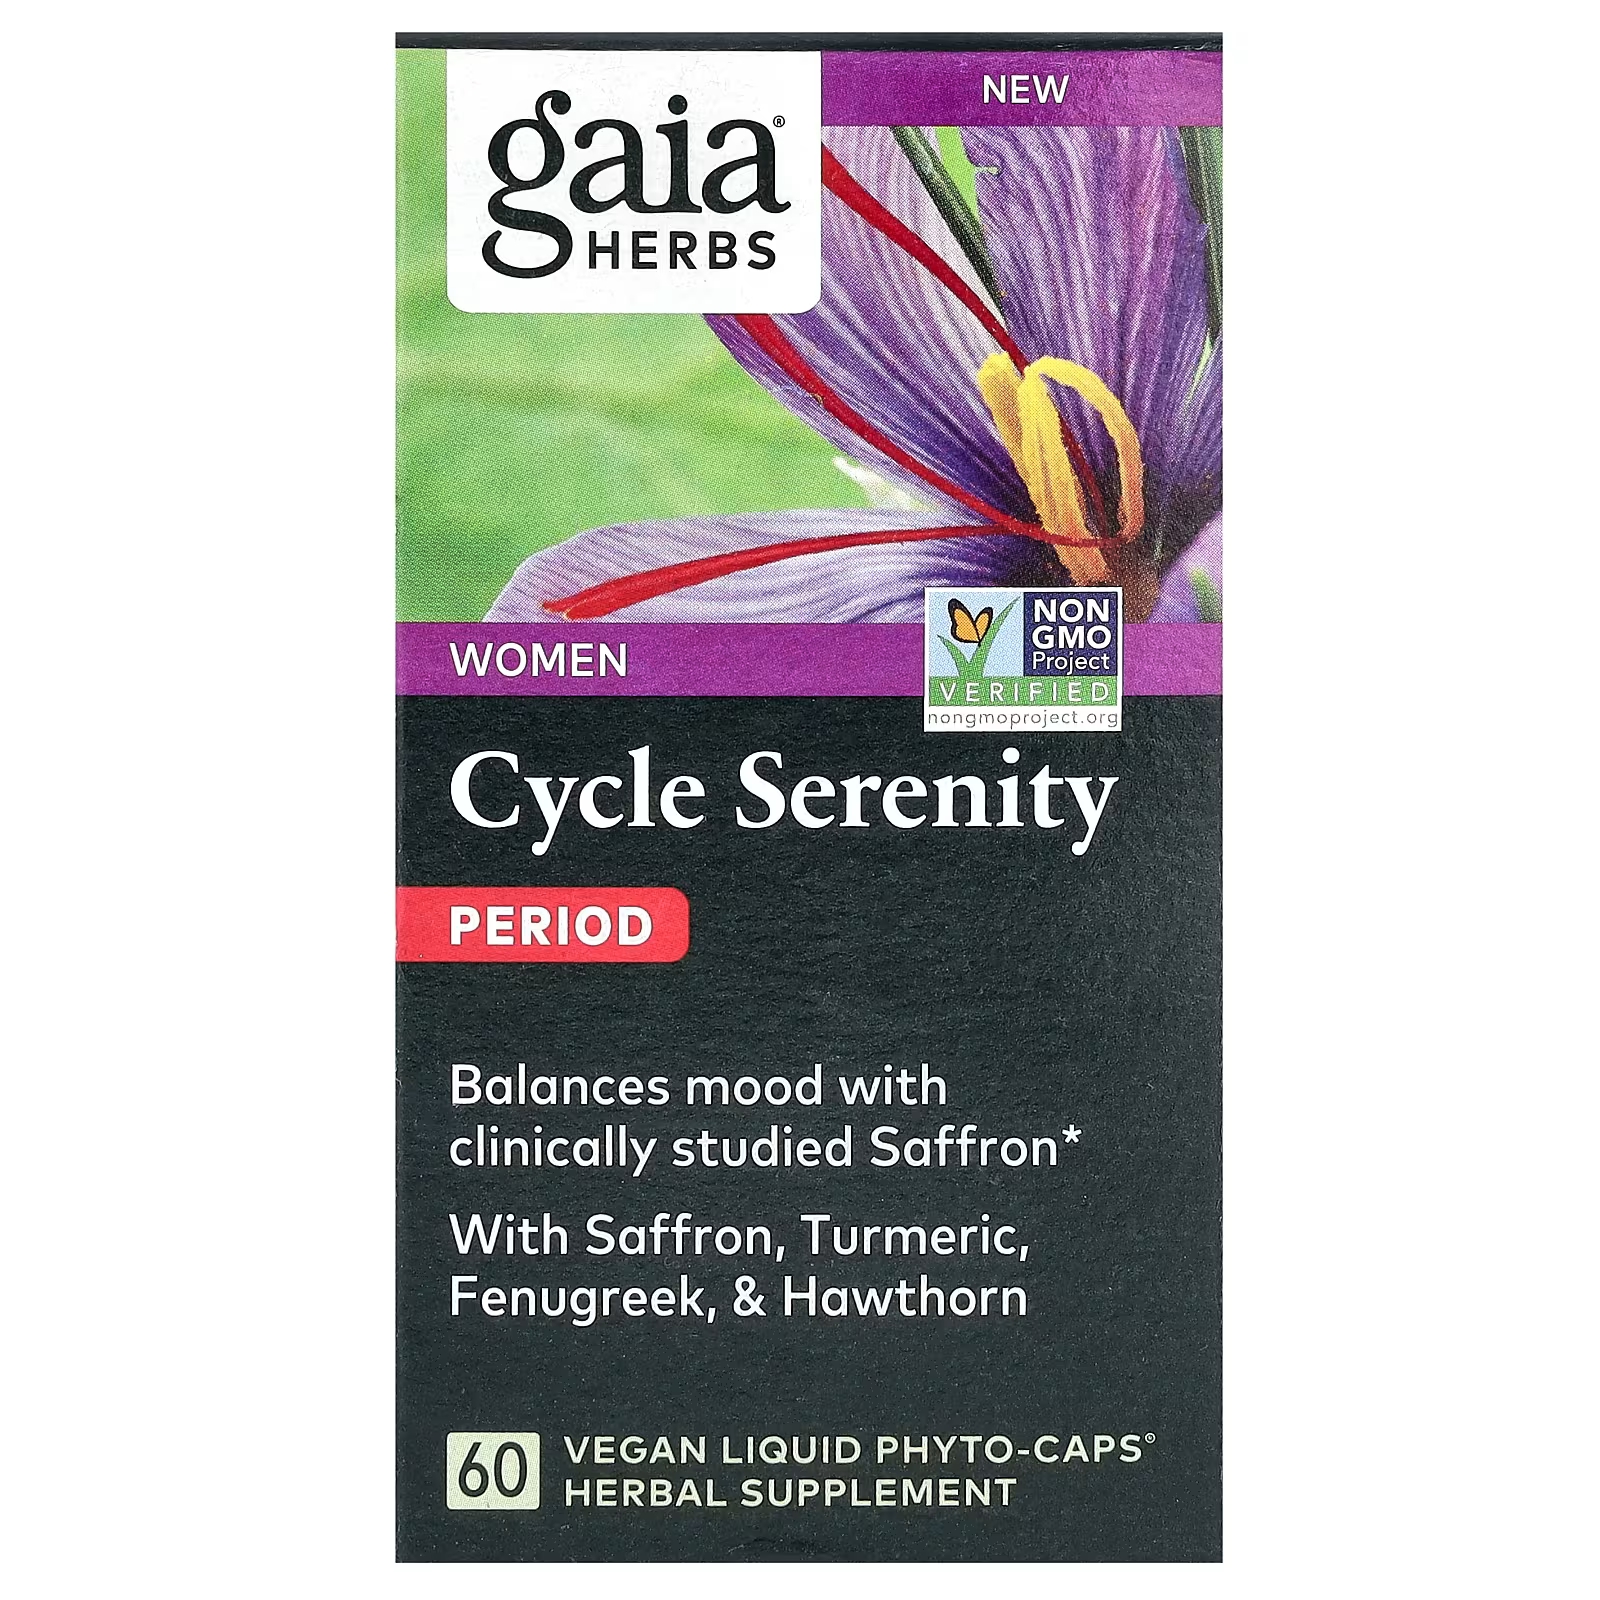 Растительная добавка Gaia Herbs Women Cycle Serenity Period, 60 фитокапсул растительная добавка gaia herbs sound sleep 60 жидких фитокапсул